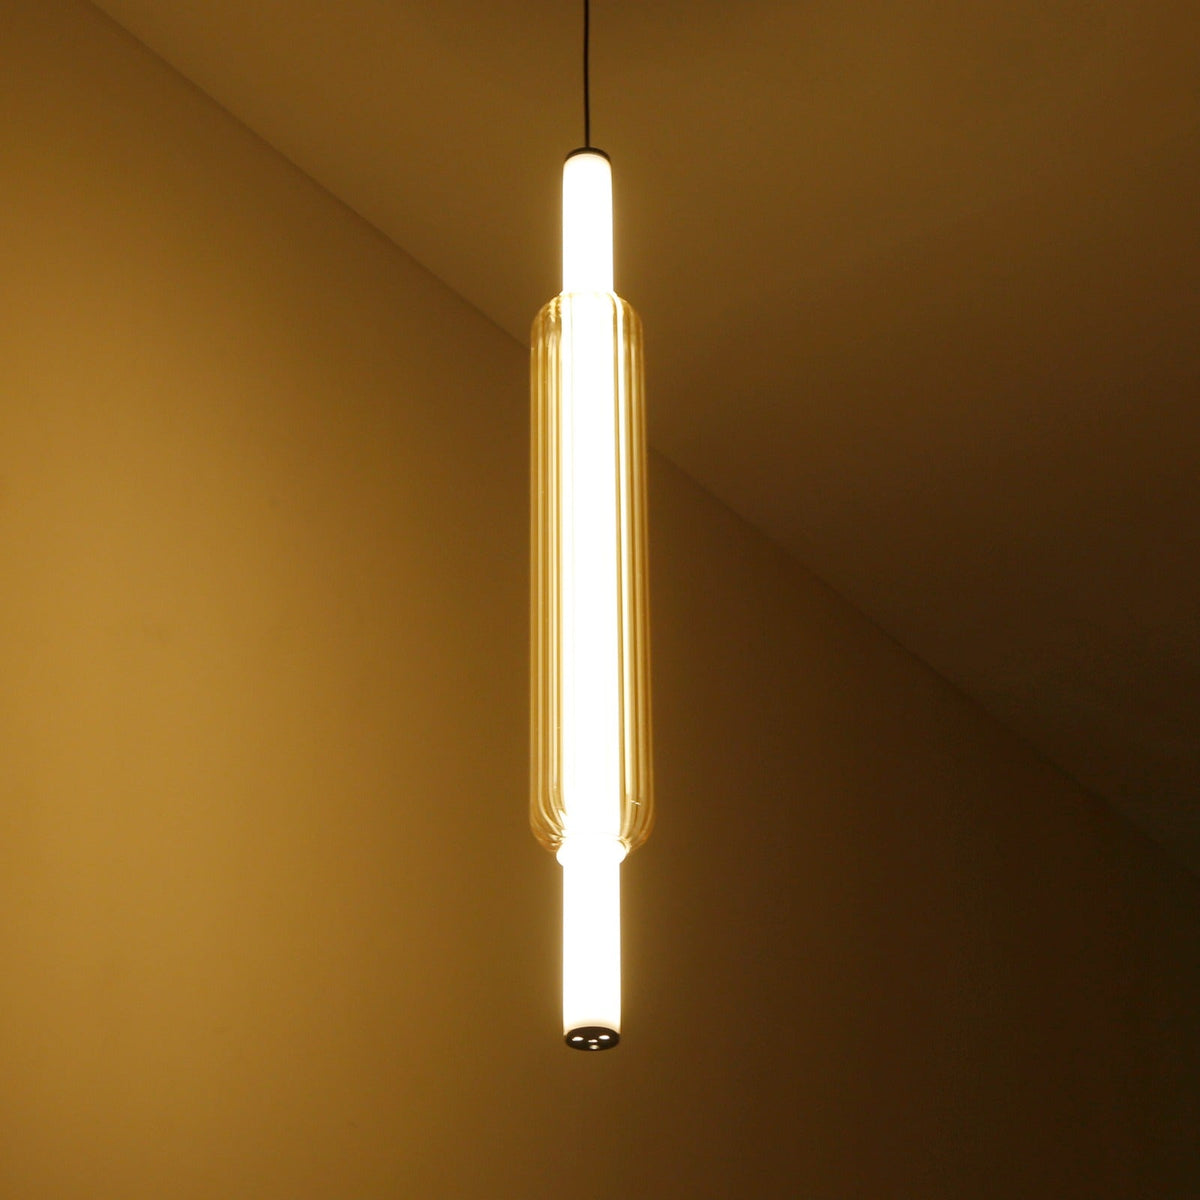 Buy Piping Hot Amber LED Pendant Light online